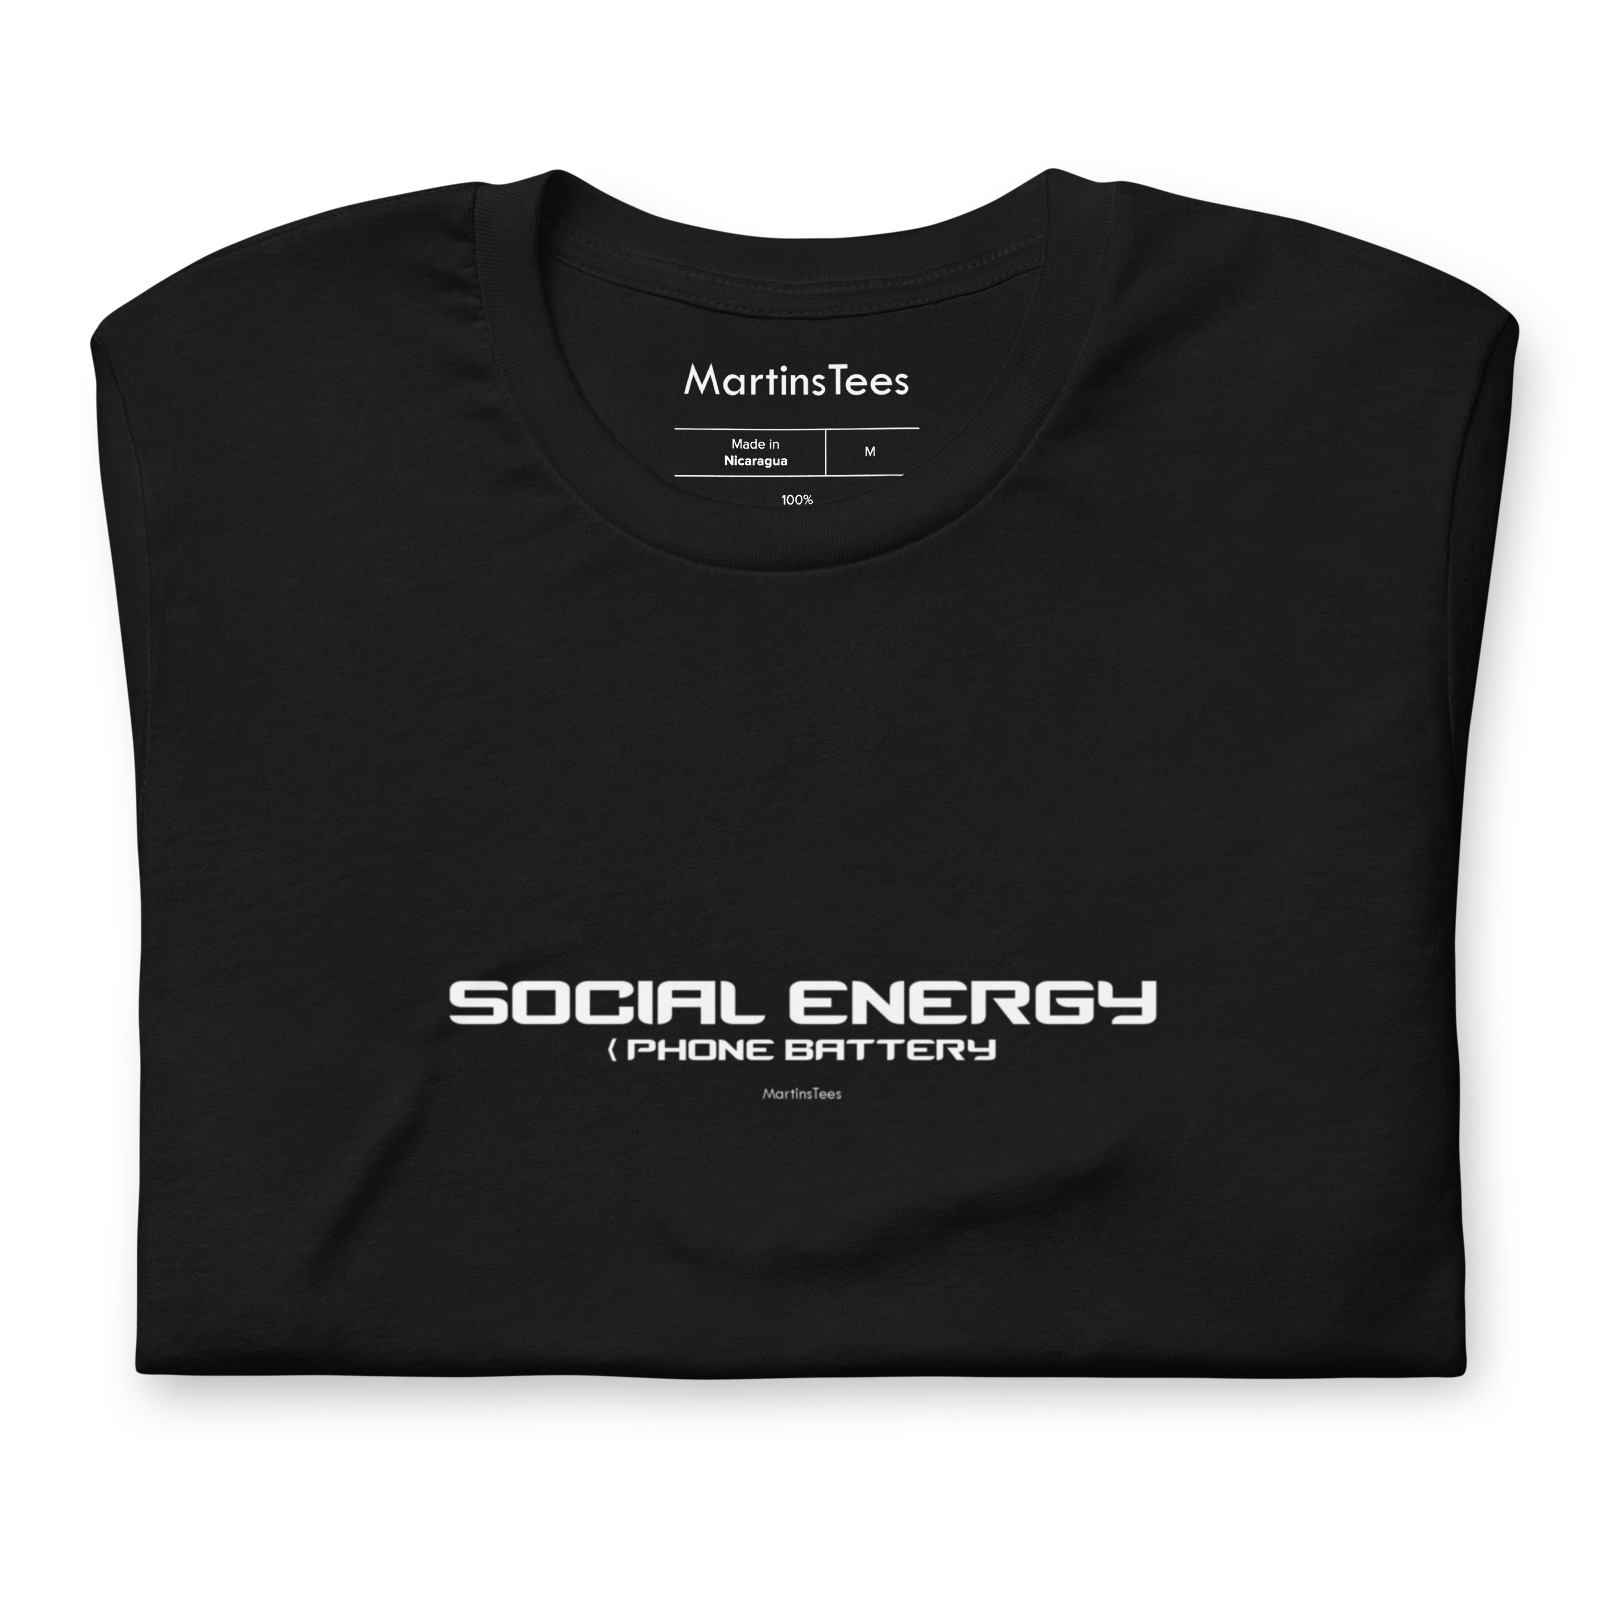 T-shirt: SOCIAL ENERGY - < PHONE BATTERY